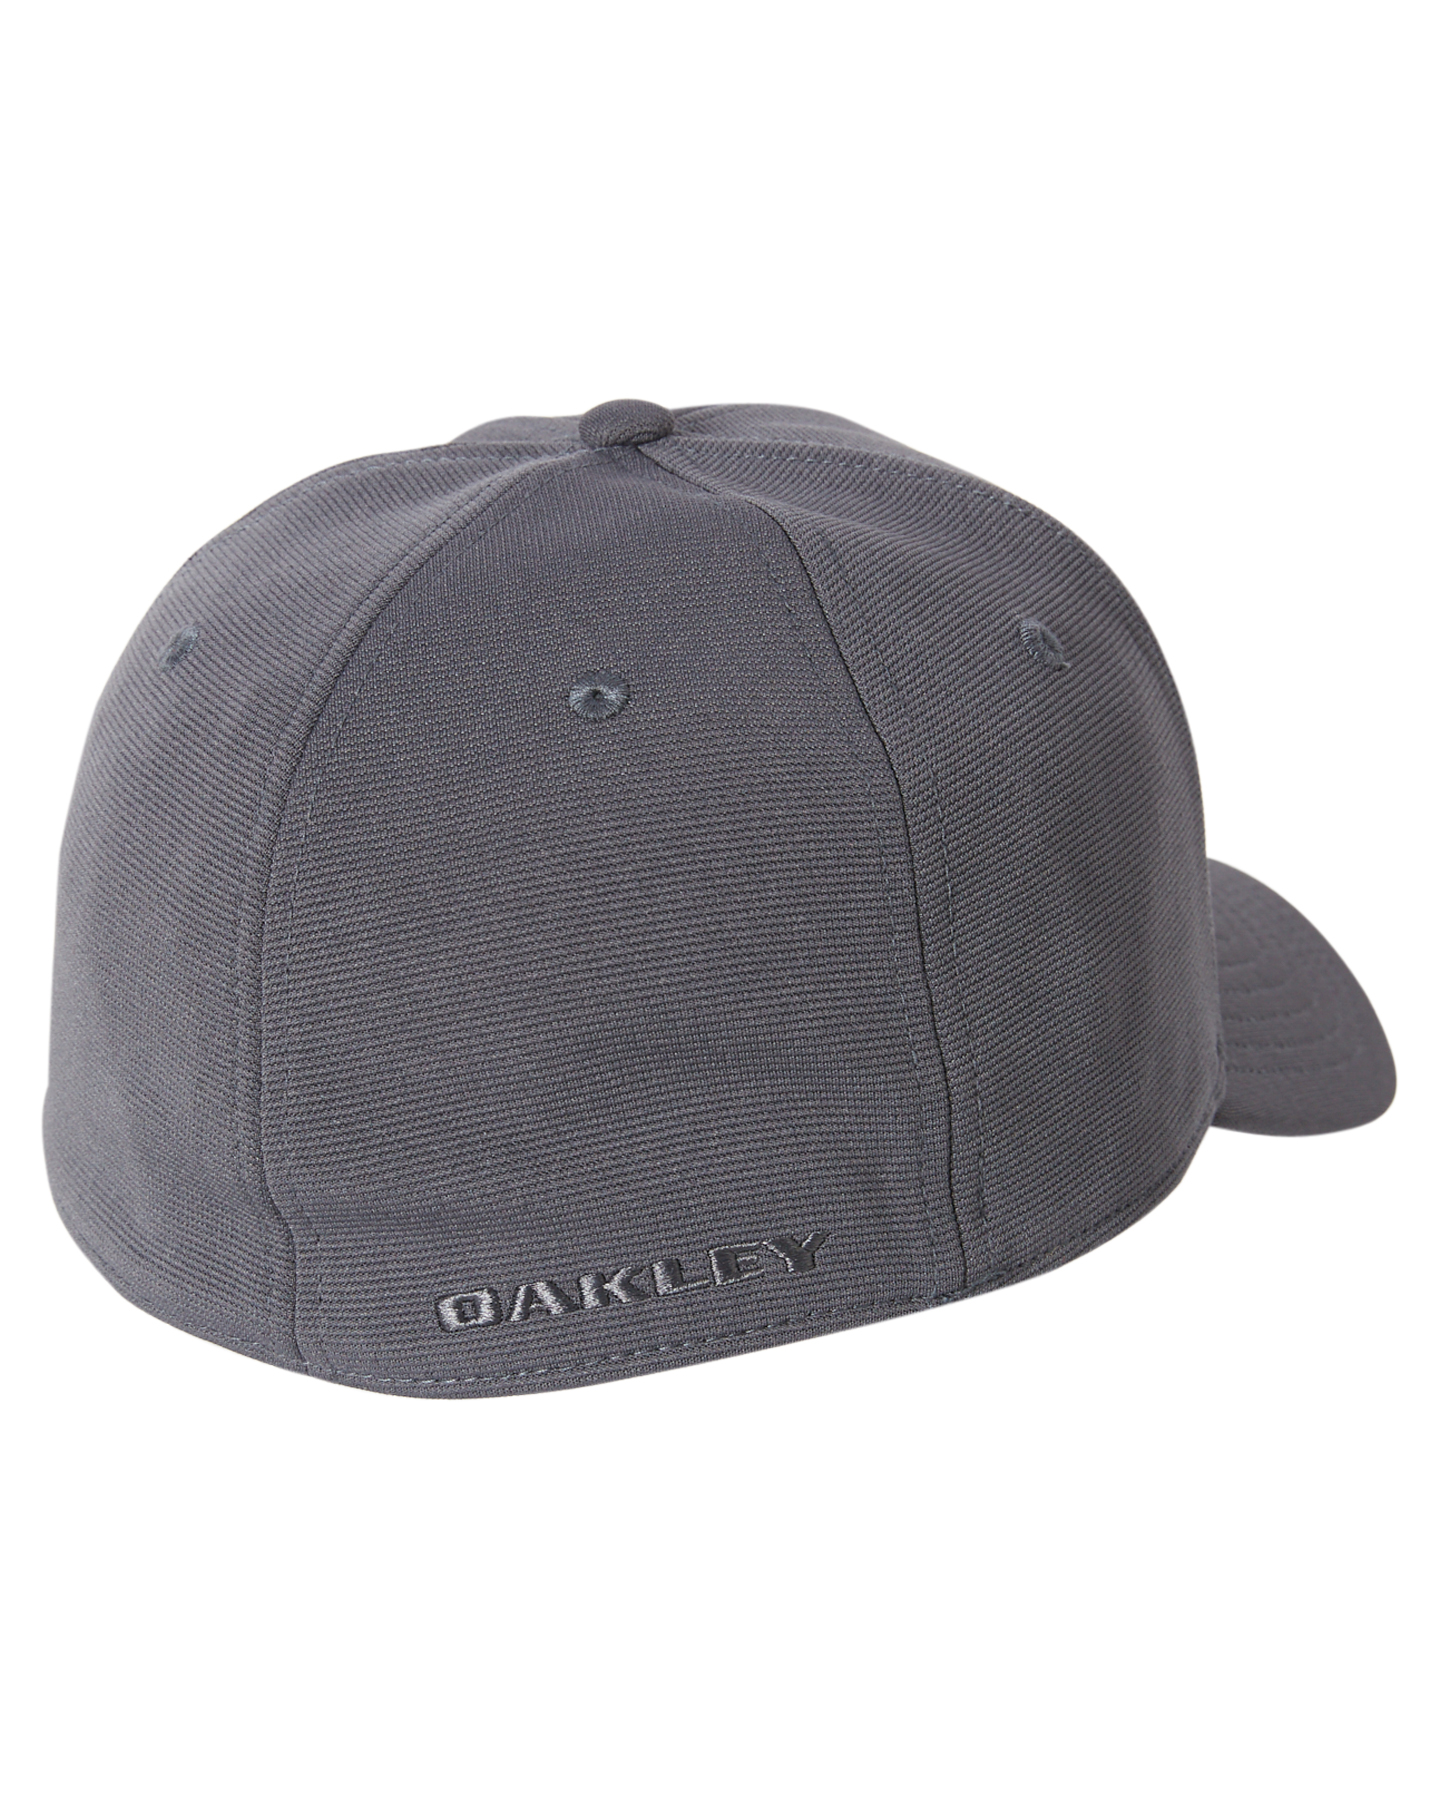 Oakley Tincan Cap - Uniform Grey | SurfStitch